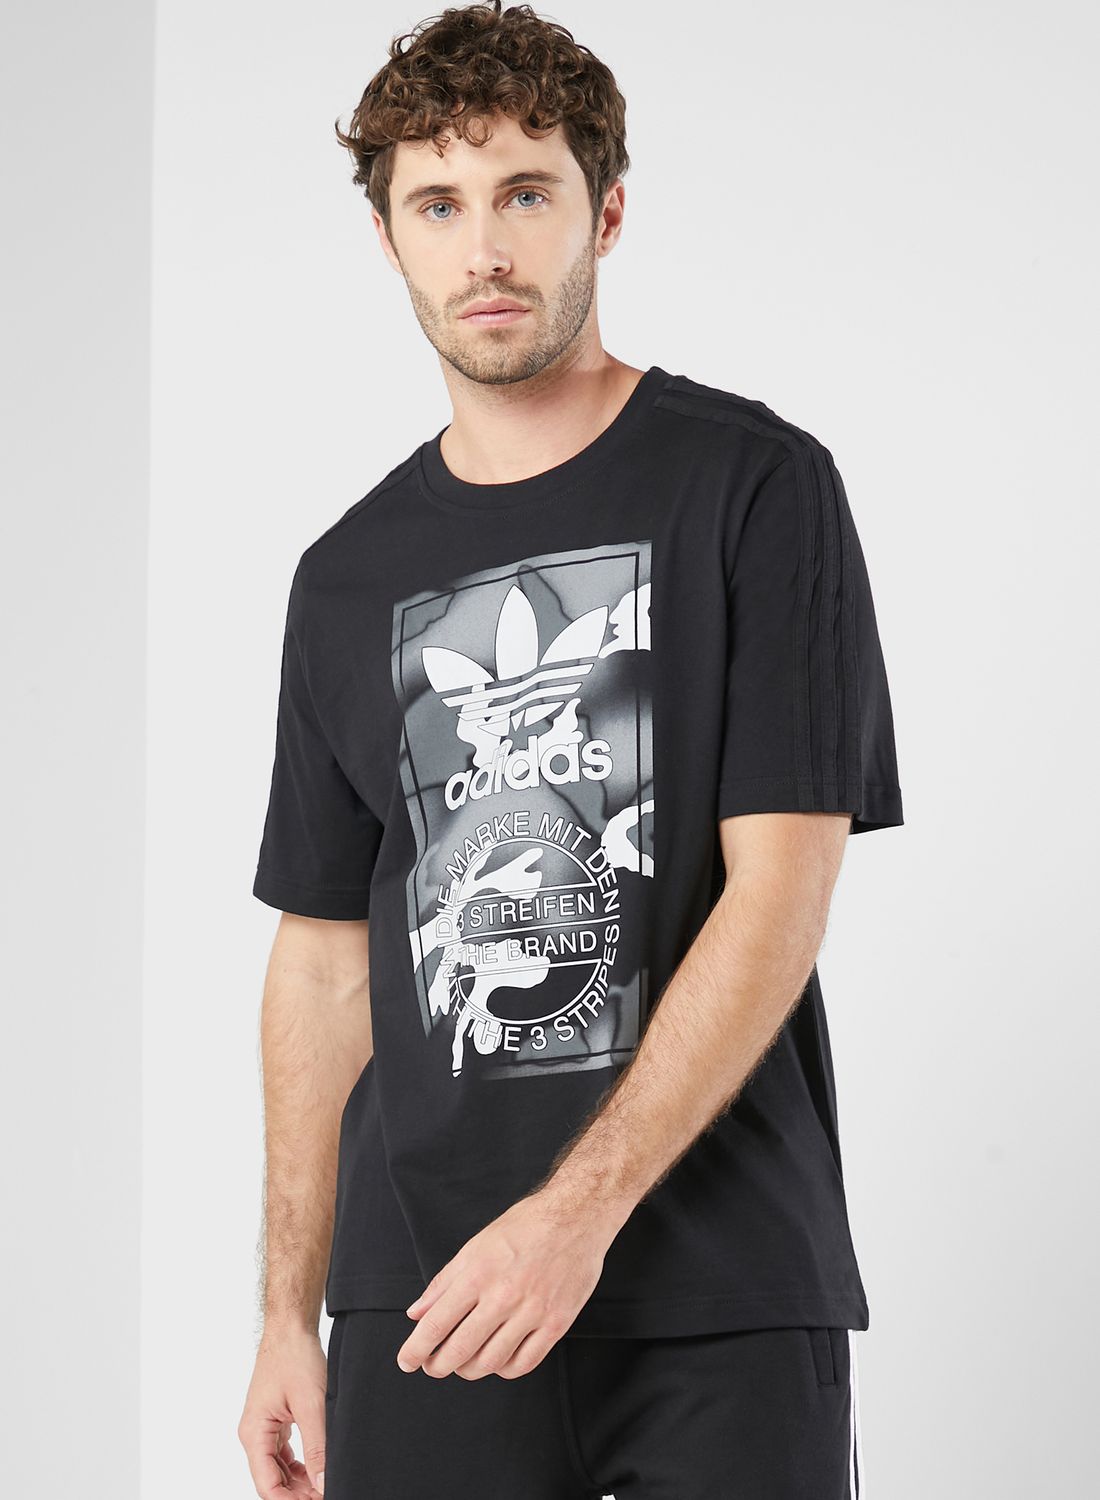 Men in adidas Qatar T-Shirt Tongue Camo for Buy Black Originals Graphic